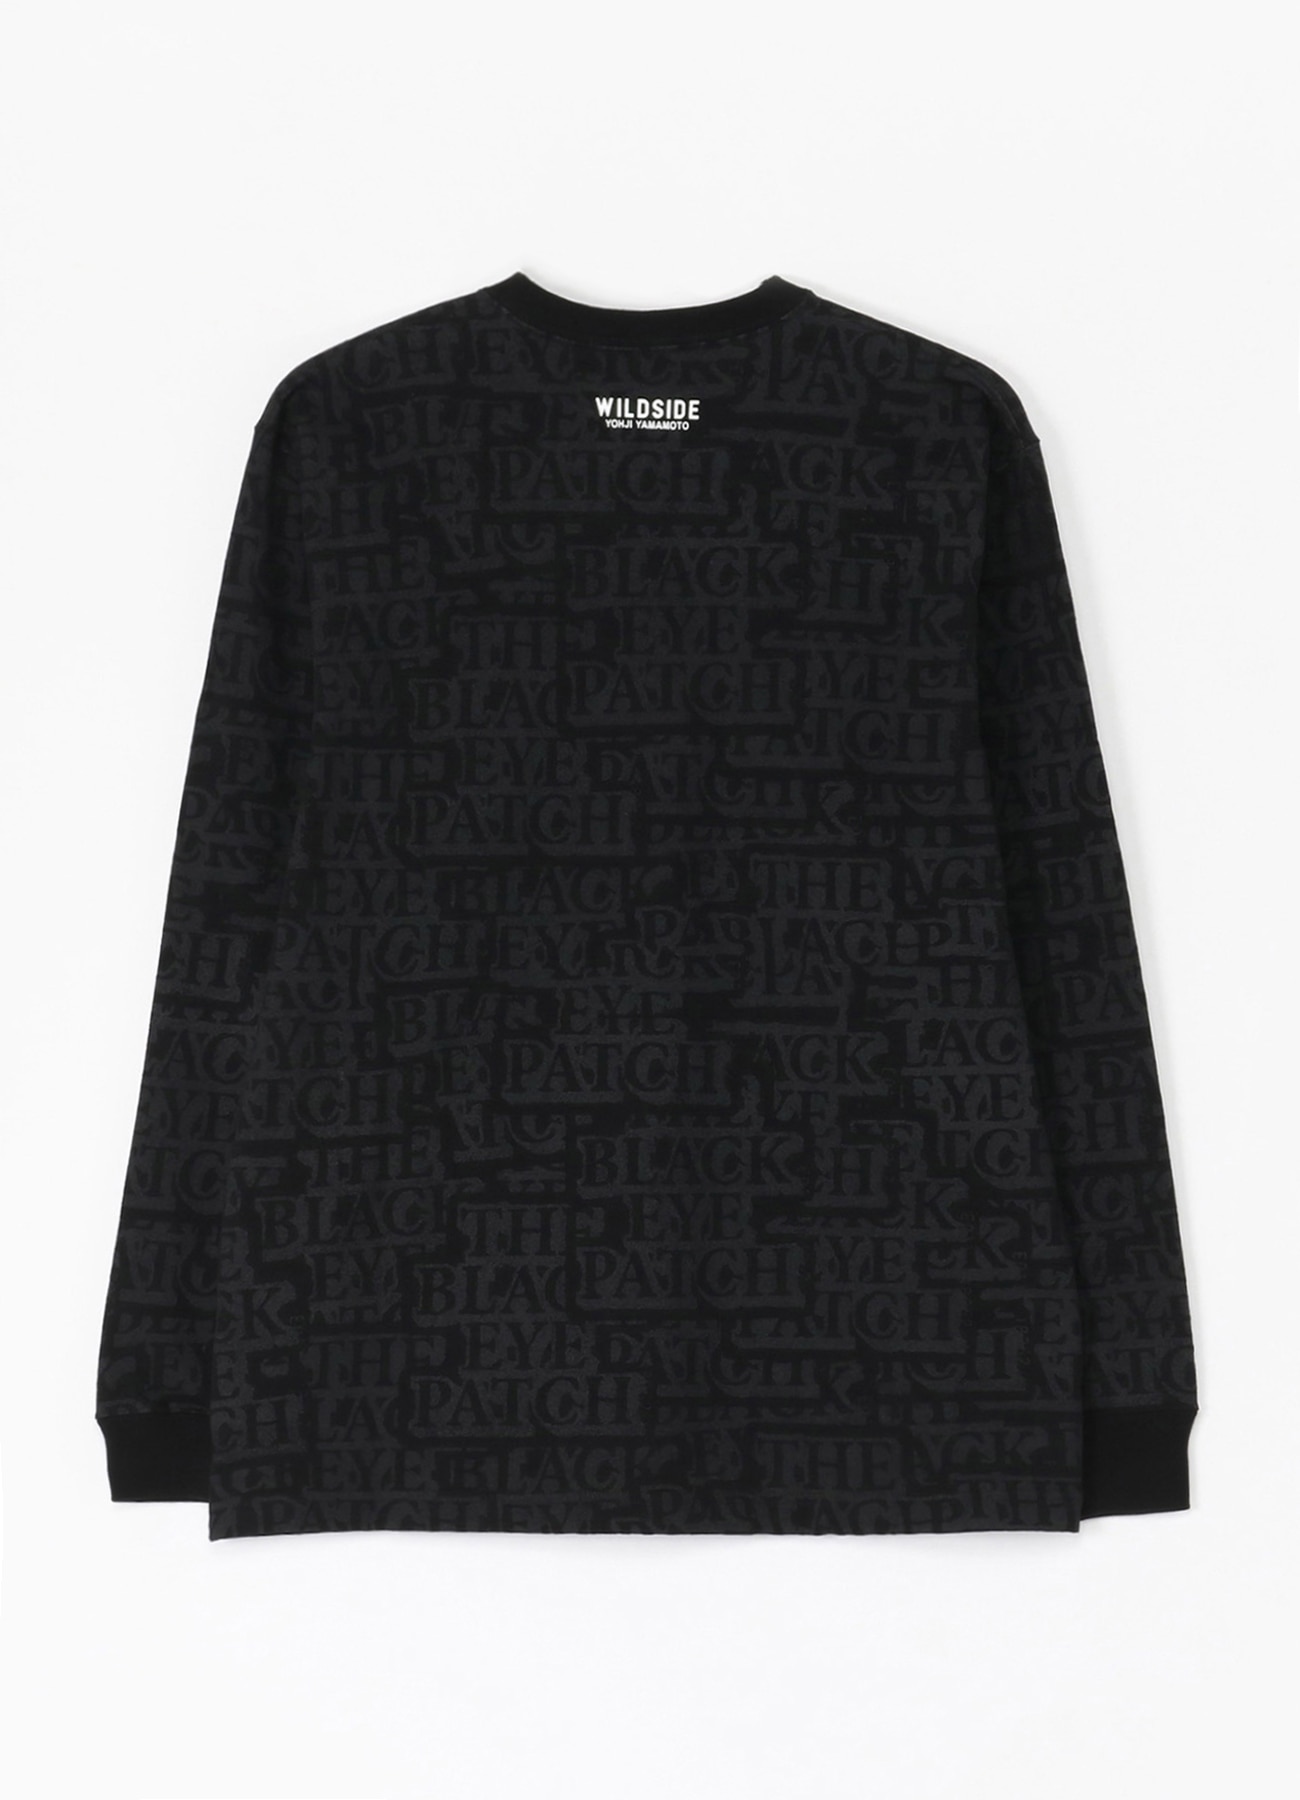 WILDSIDE × BlackEyePatch NOIR EYE PATCH Long Sleeve T-shirt